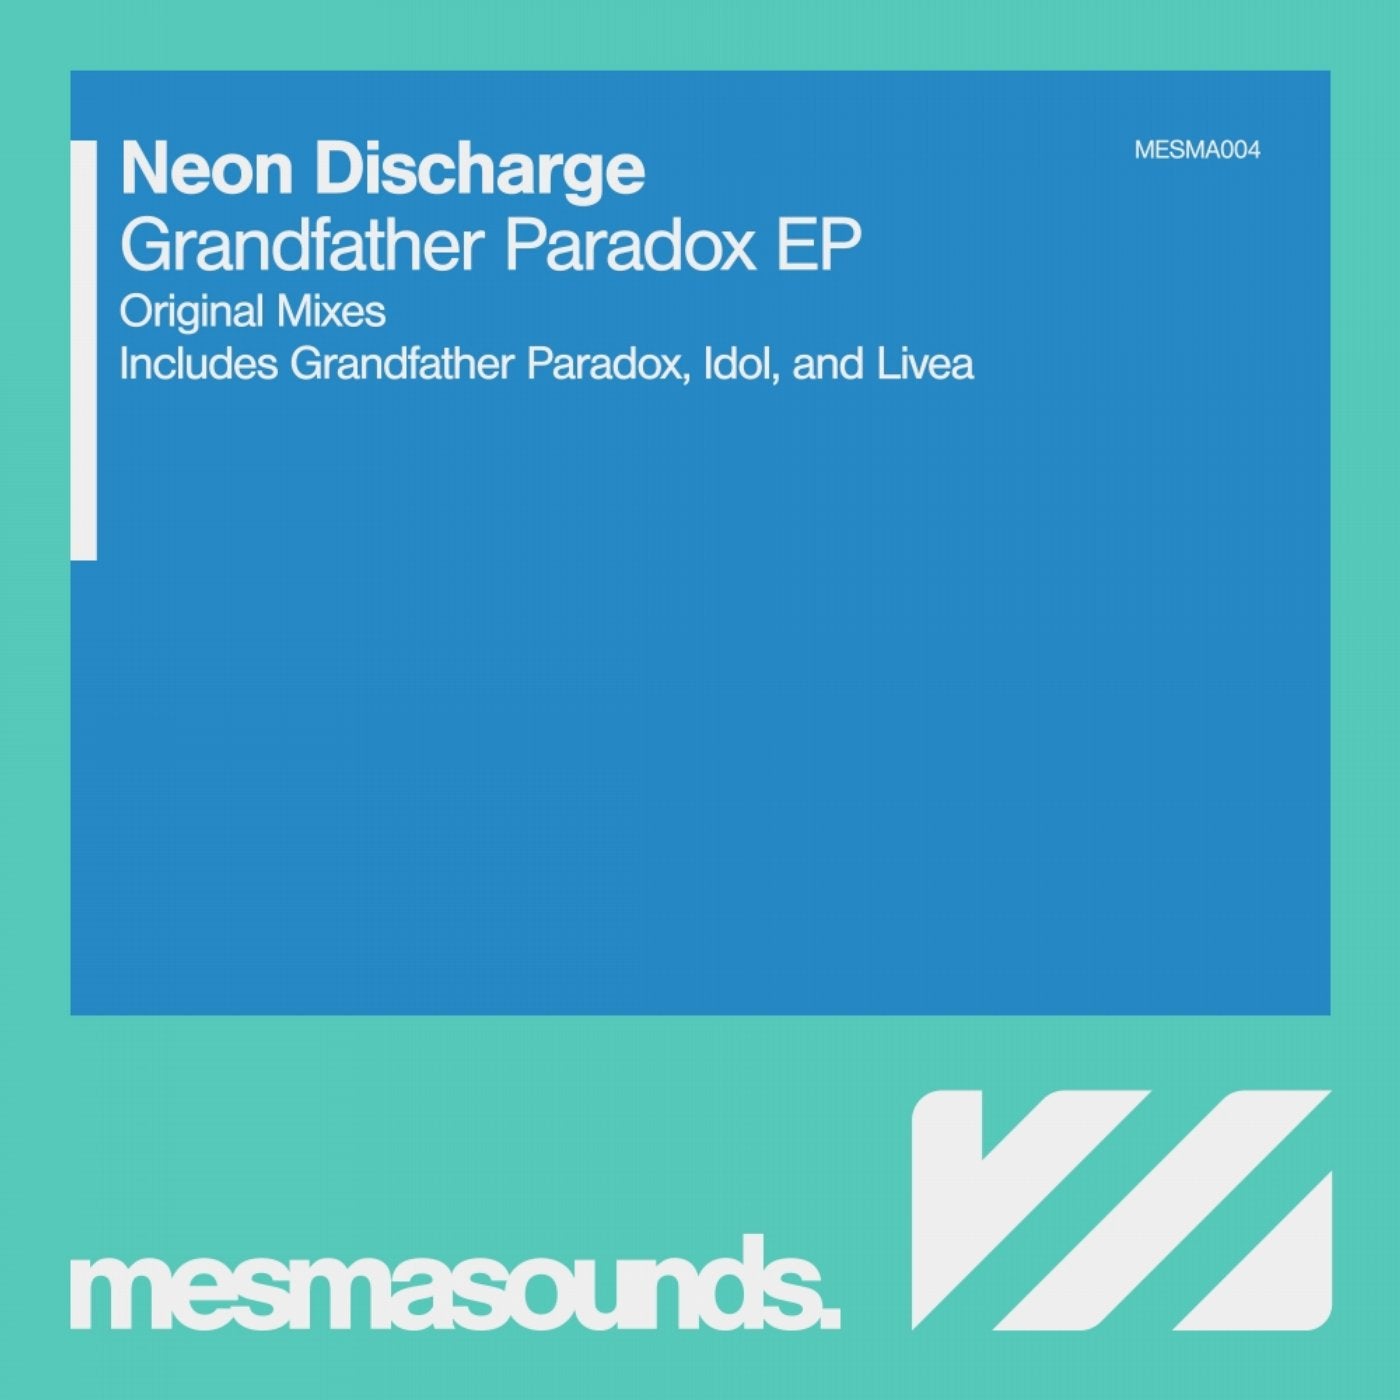 Grandfather Paradox EP